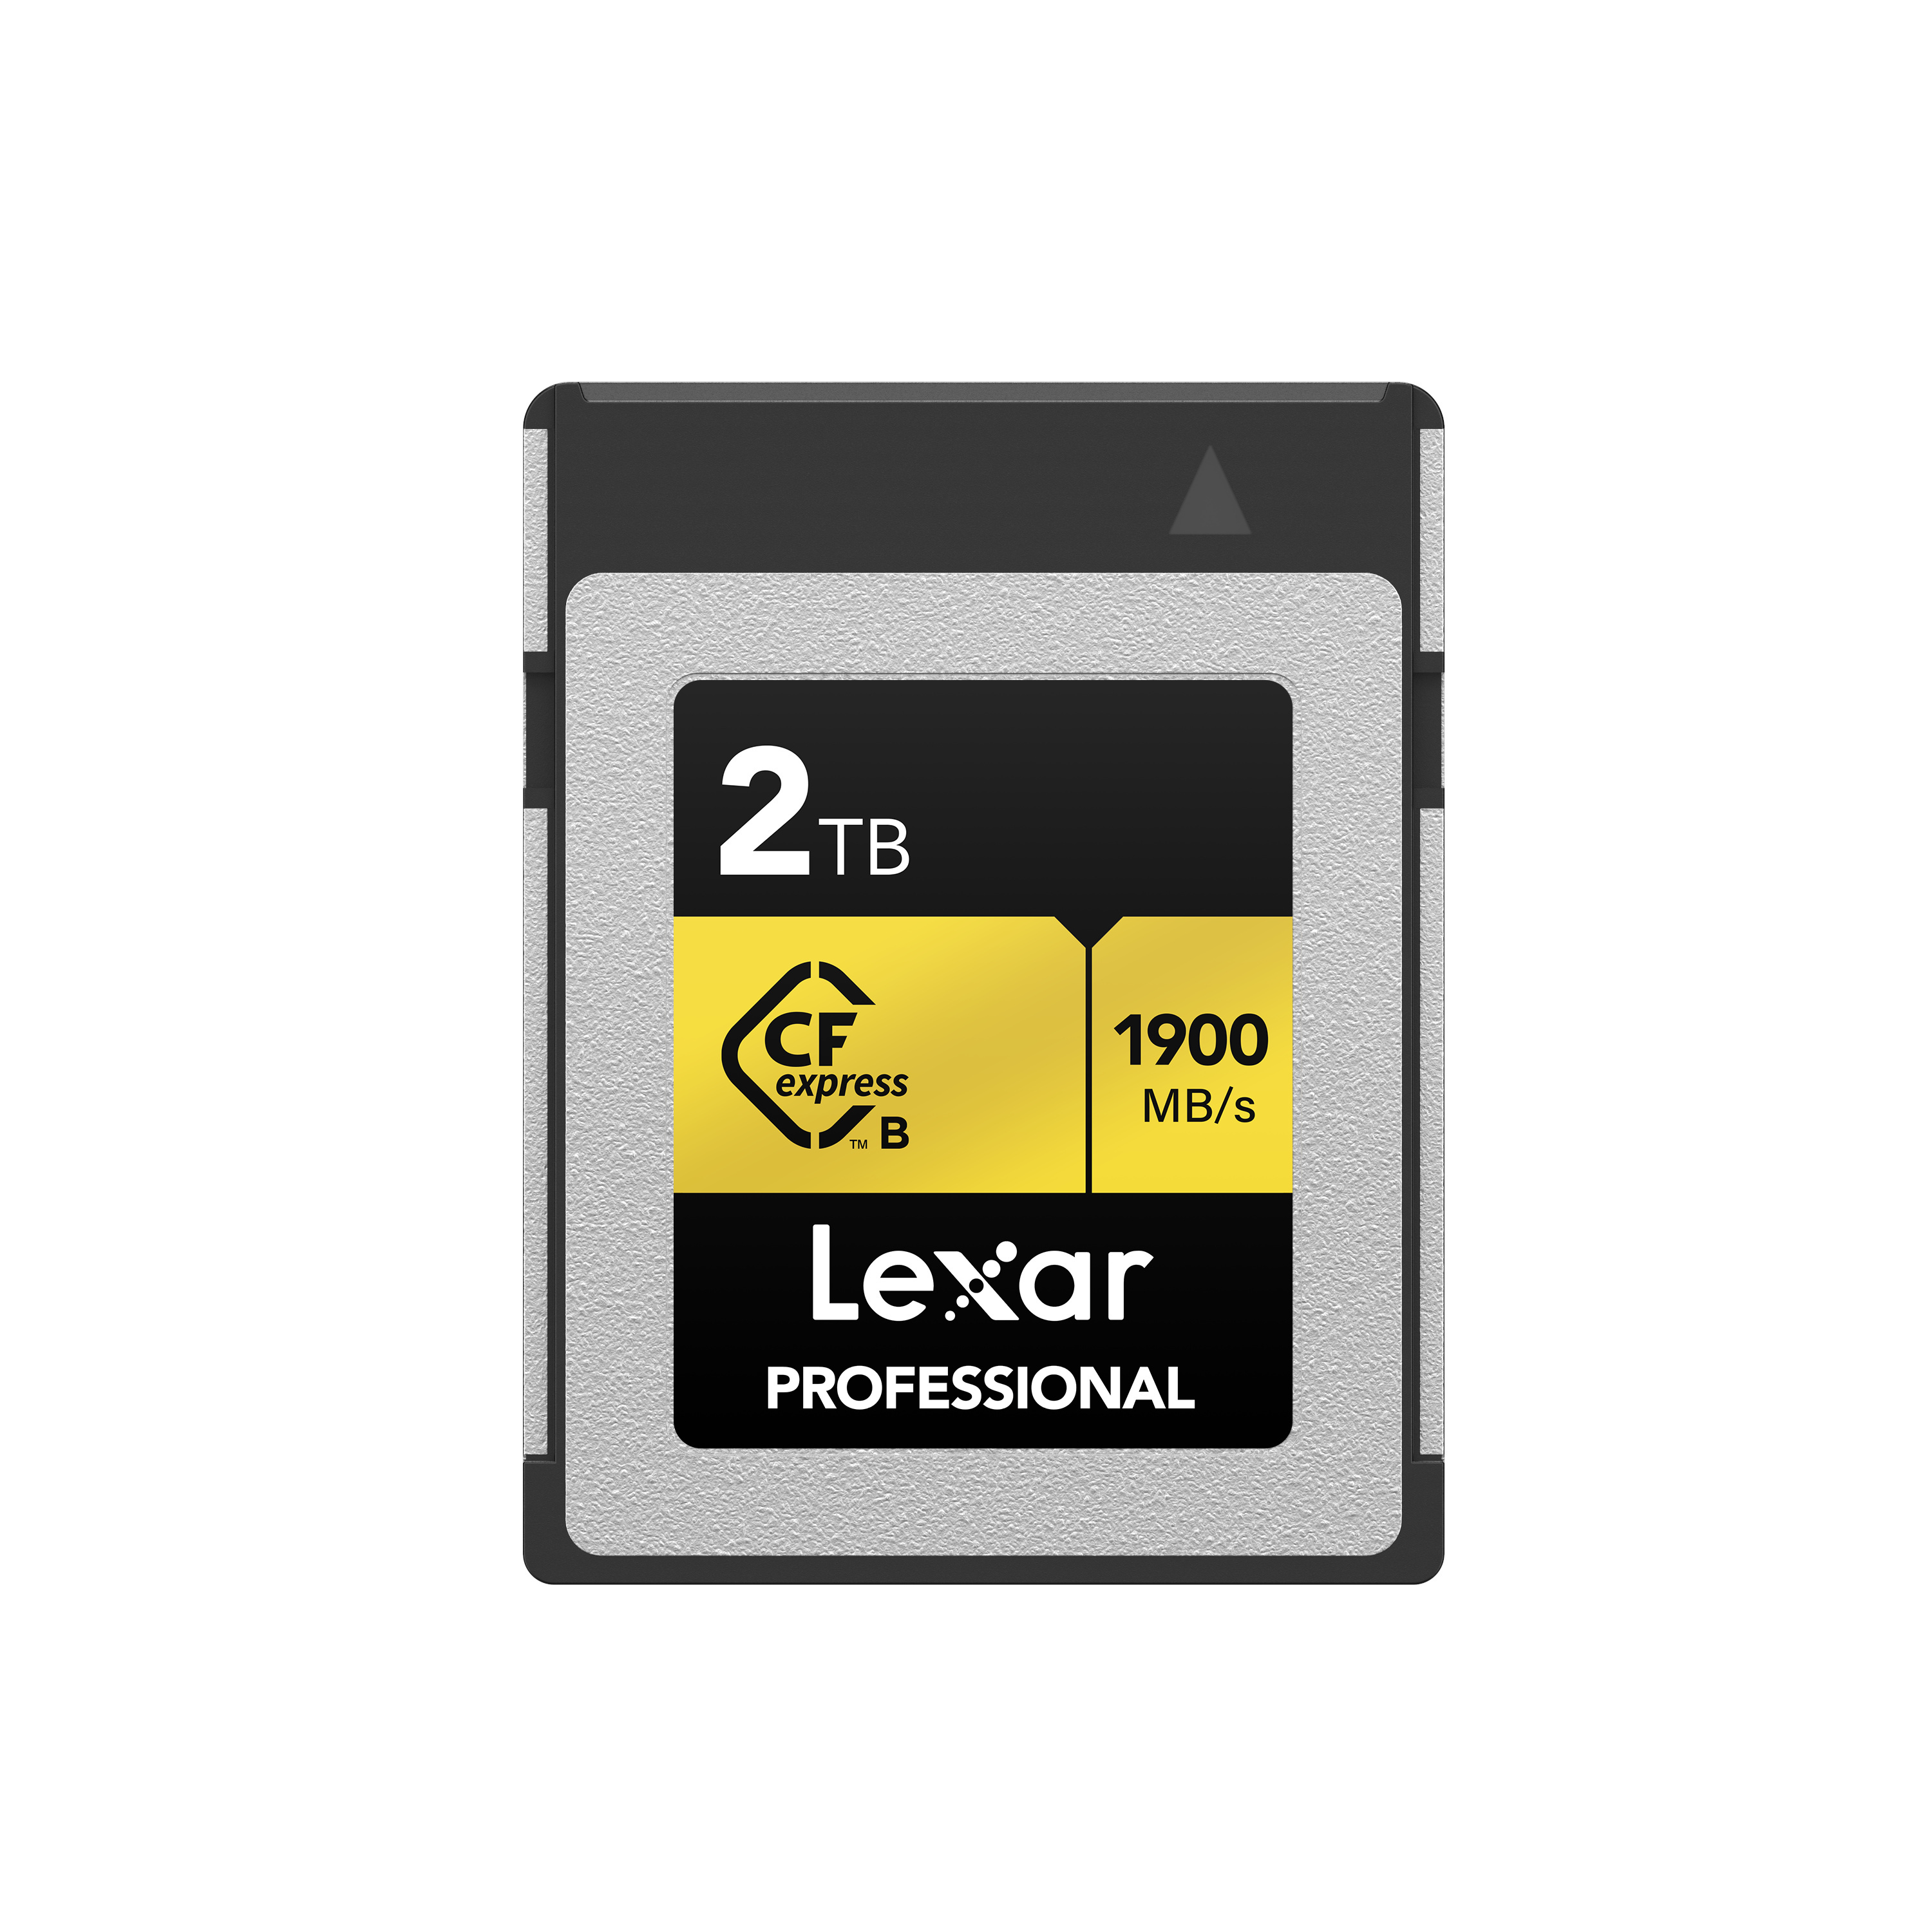 Lexar Professional 2TB CFexpressTM Type B Card GOLD PRO GOLD Series